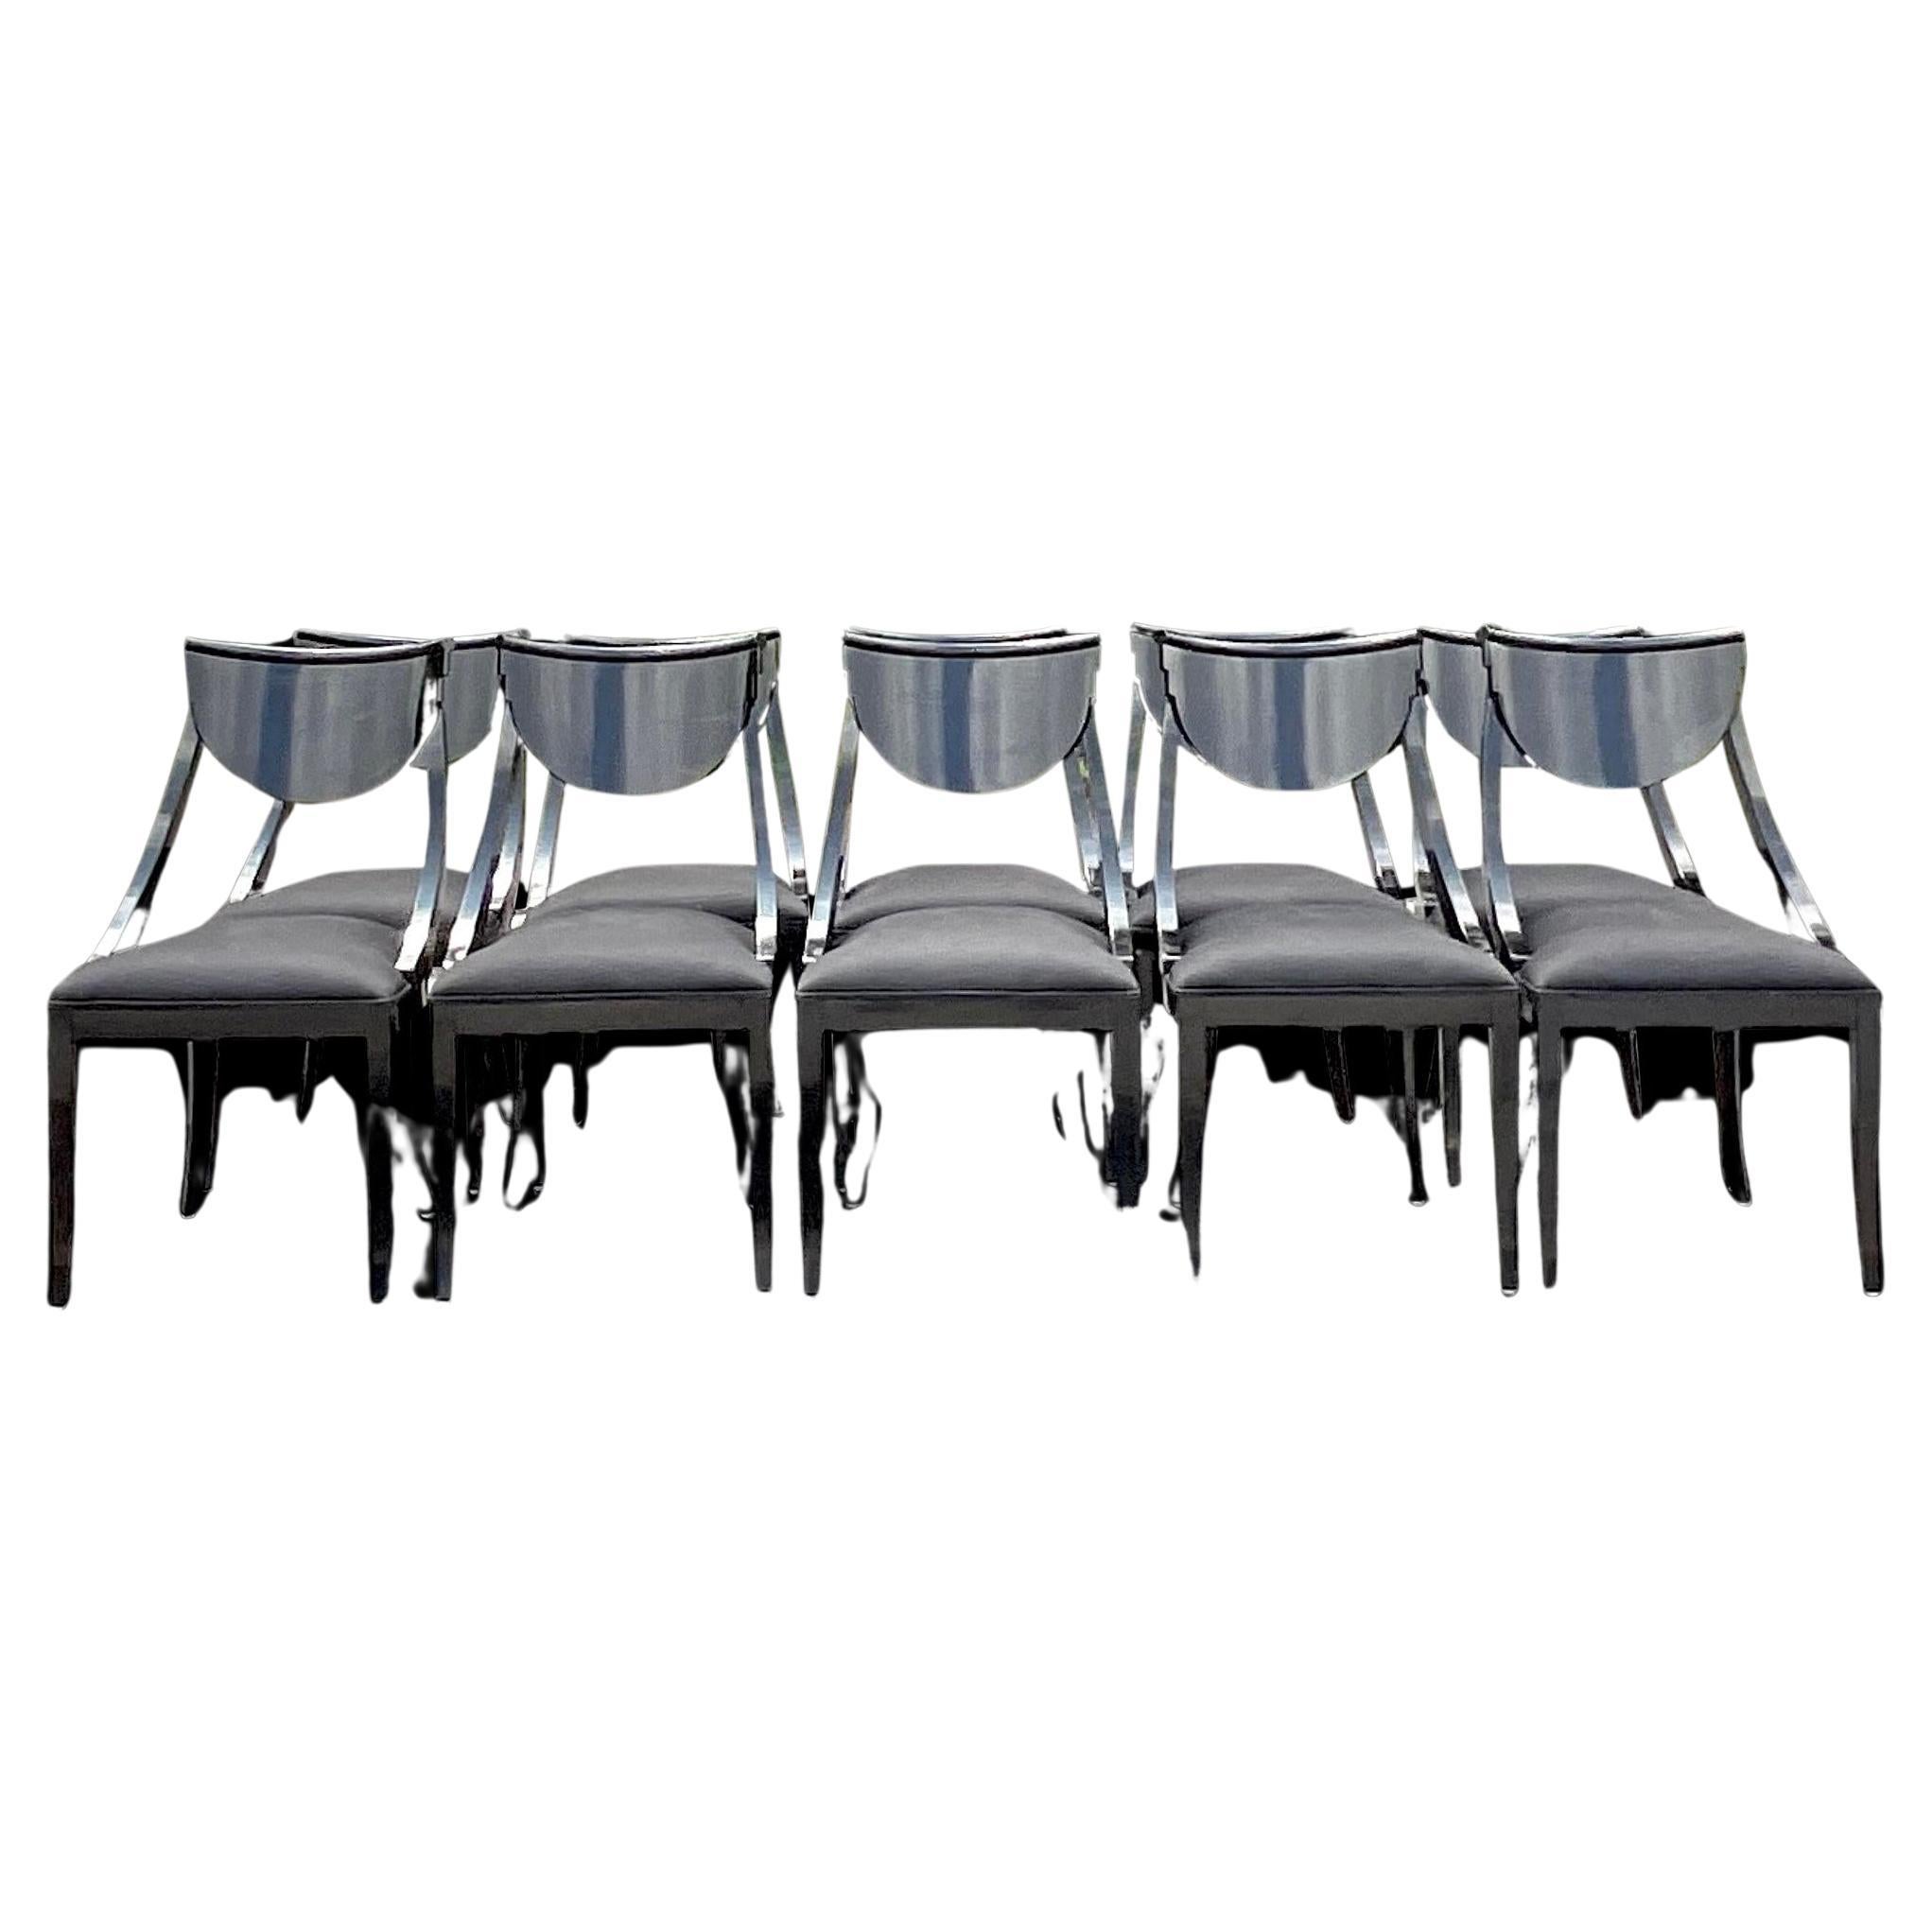 Vintage Italian Pietro Constantini Black Lacquered Kilsmos Chairs - Set of 10